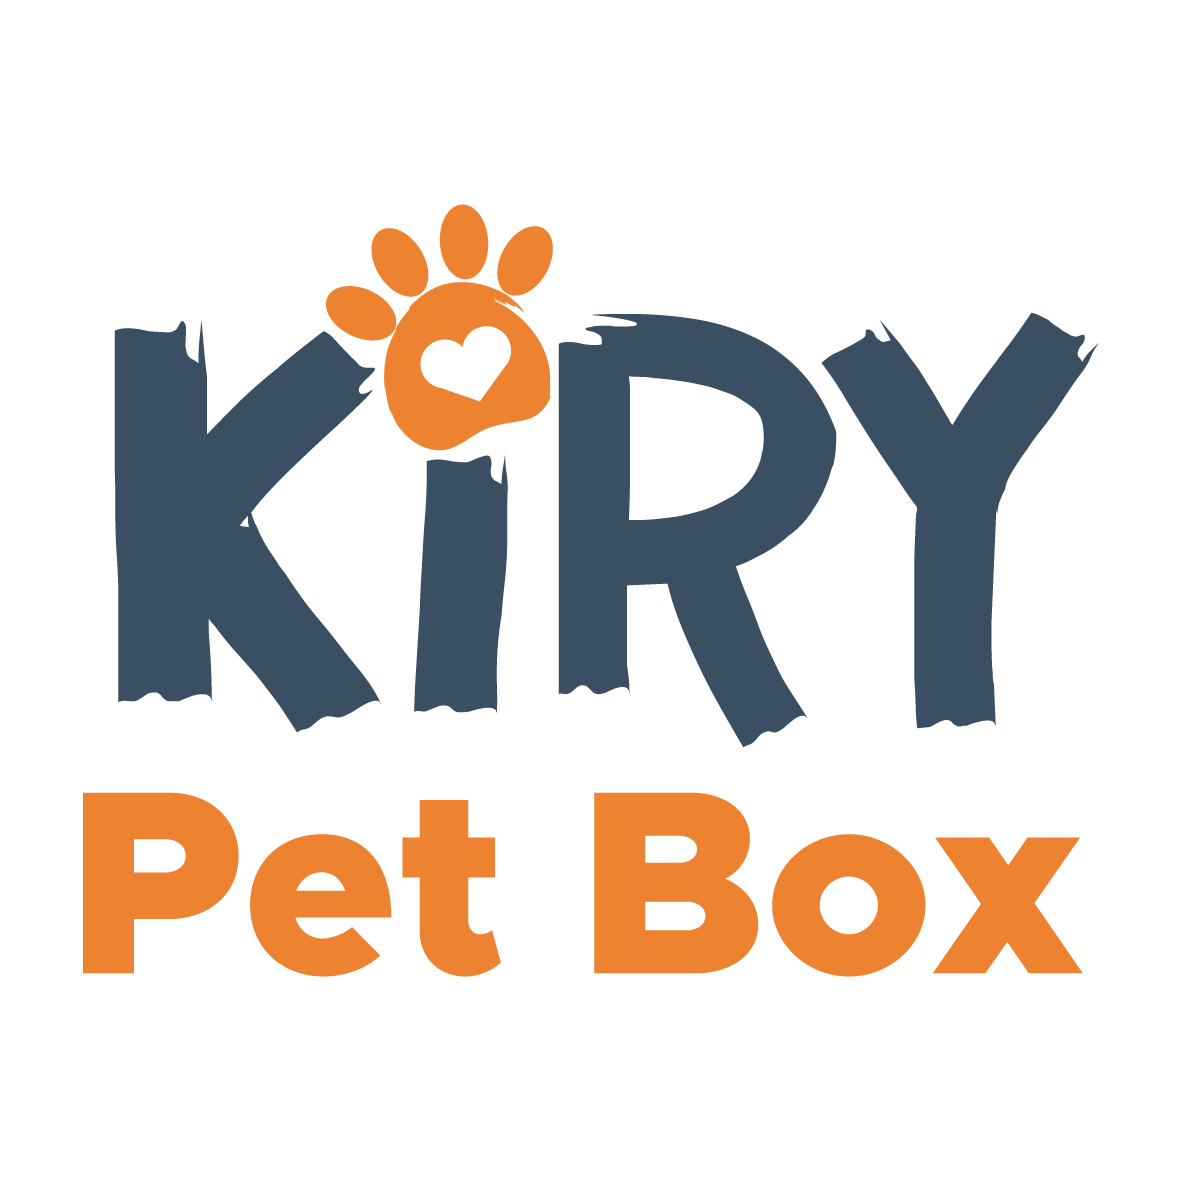 Kiry Pet